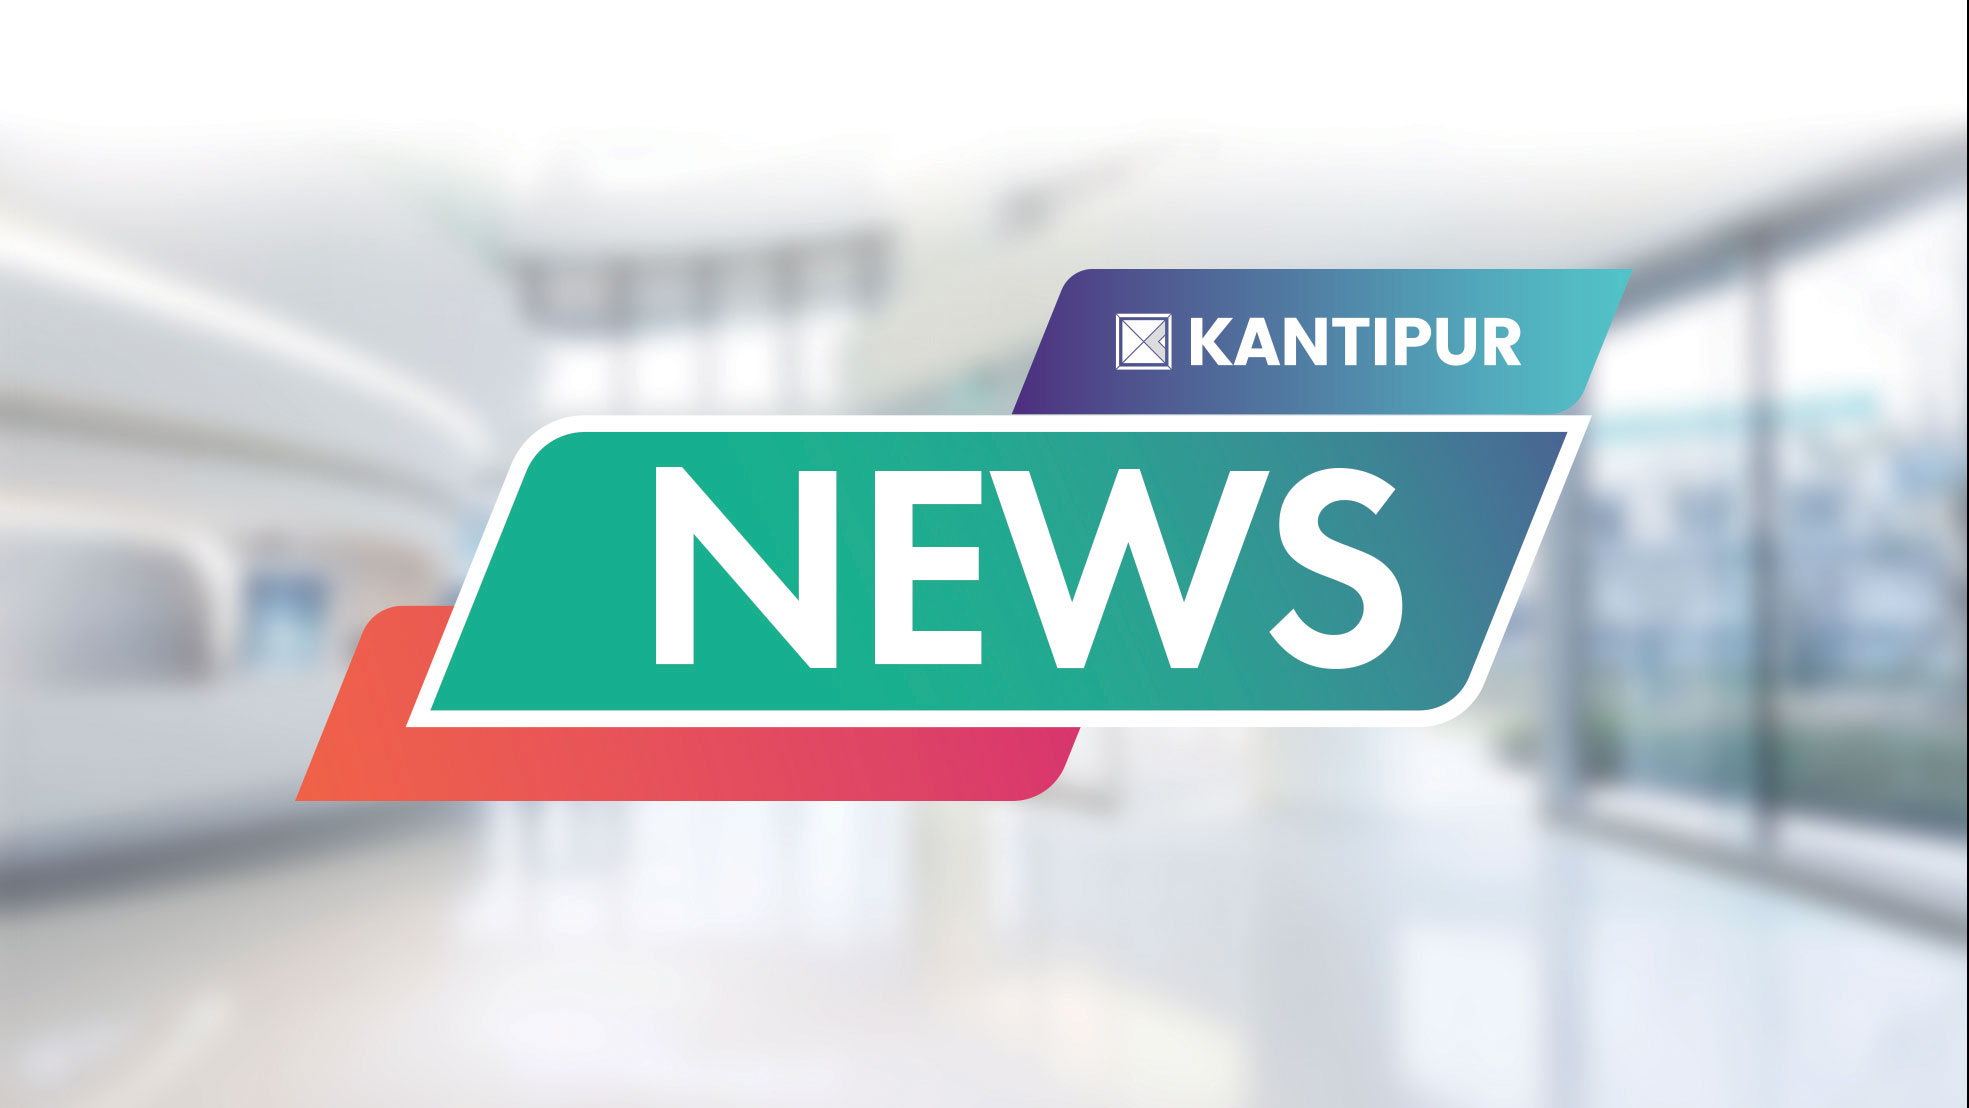 Kantipur News - Kantipur Tv Hd